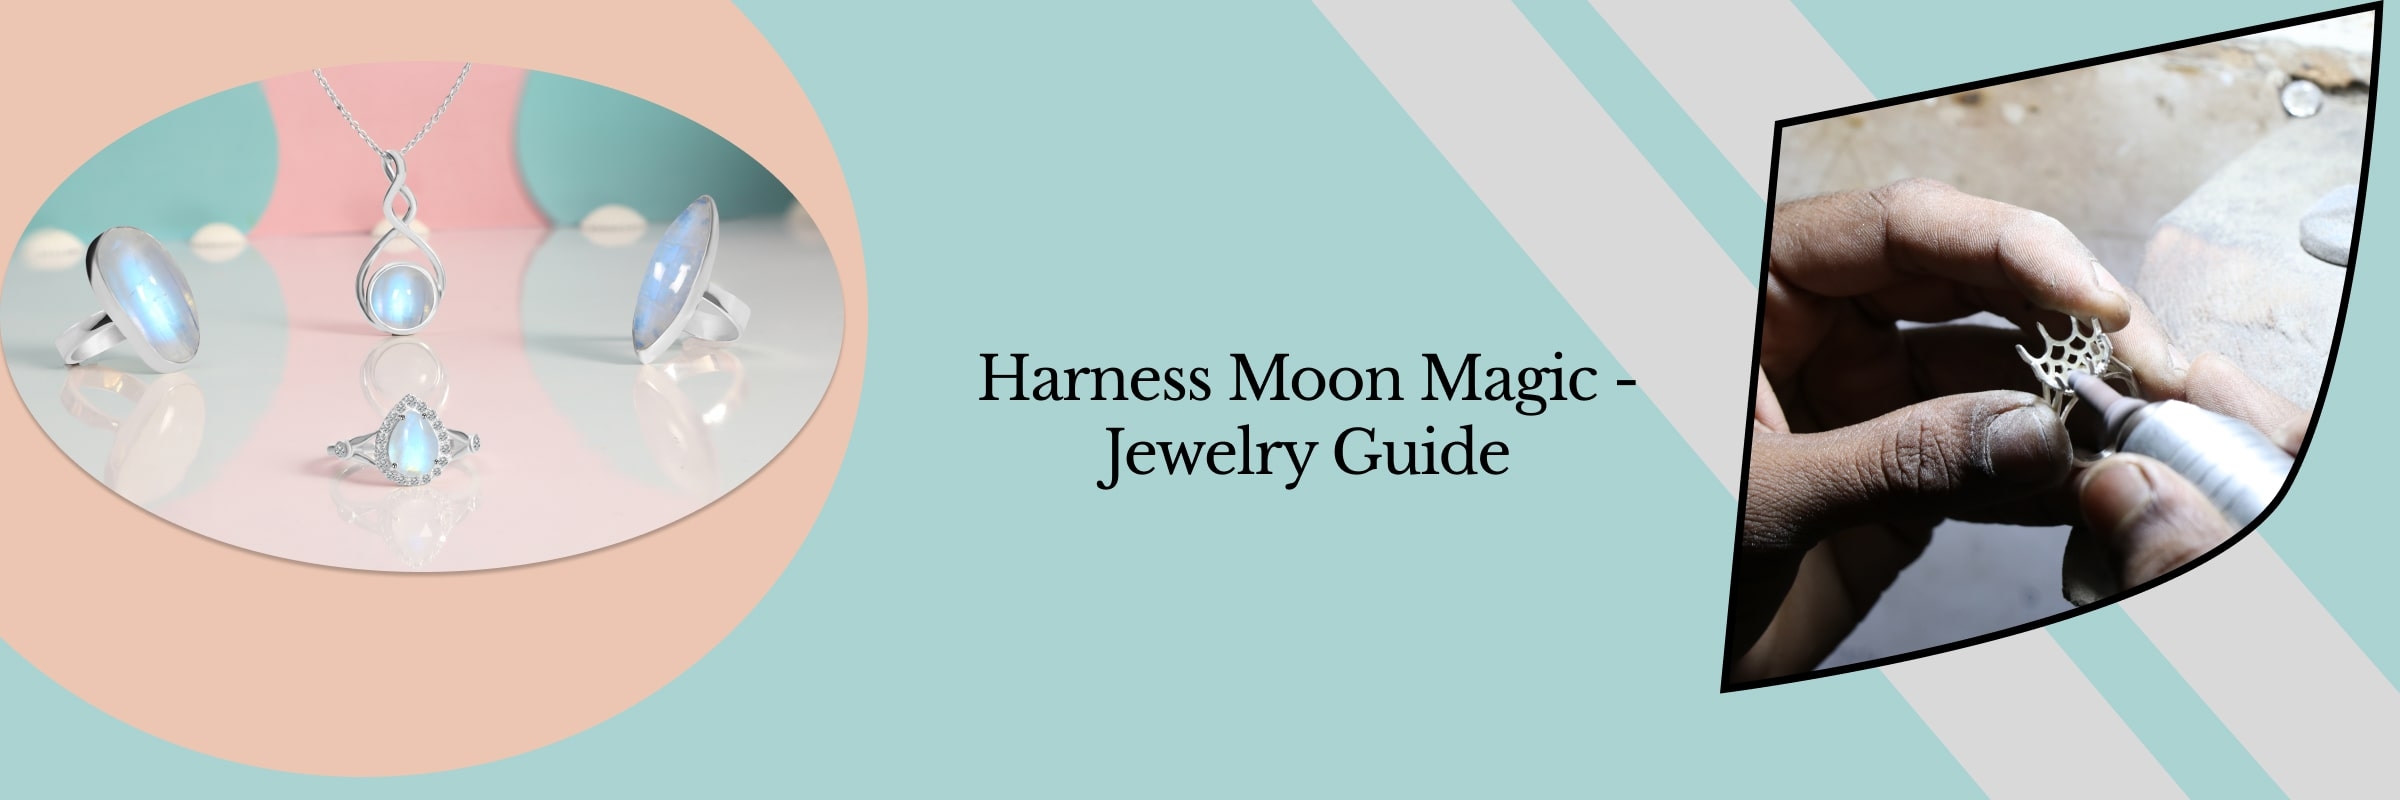 How to Use Moon Magic Jewelry